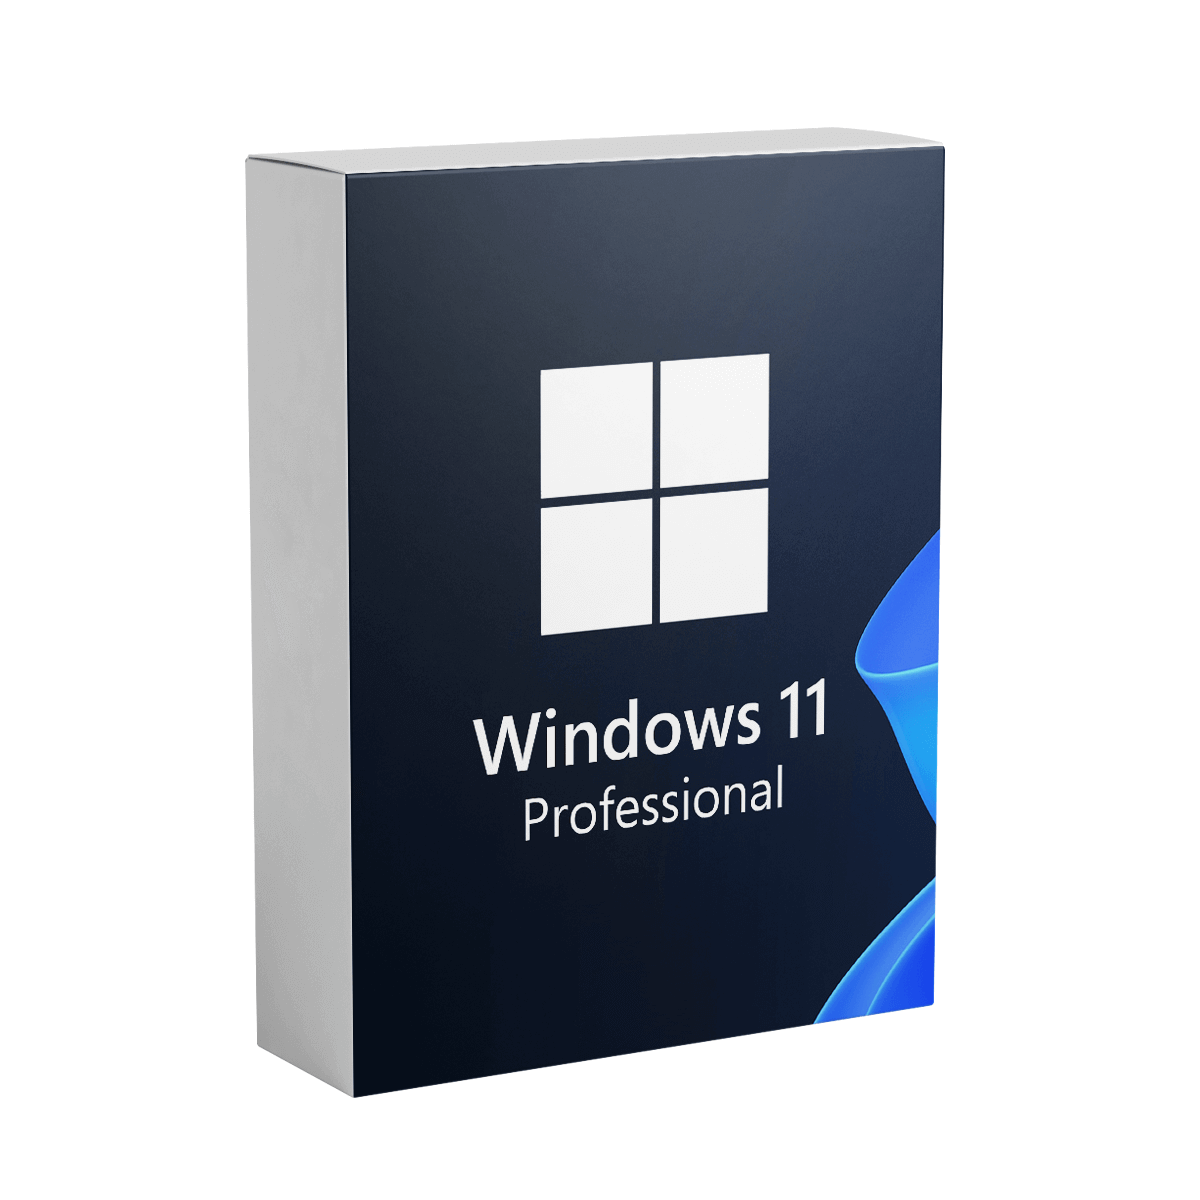 Windows 11 Professional - Lifetime License for 1 PC